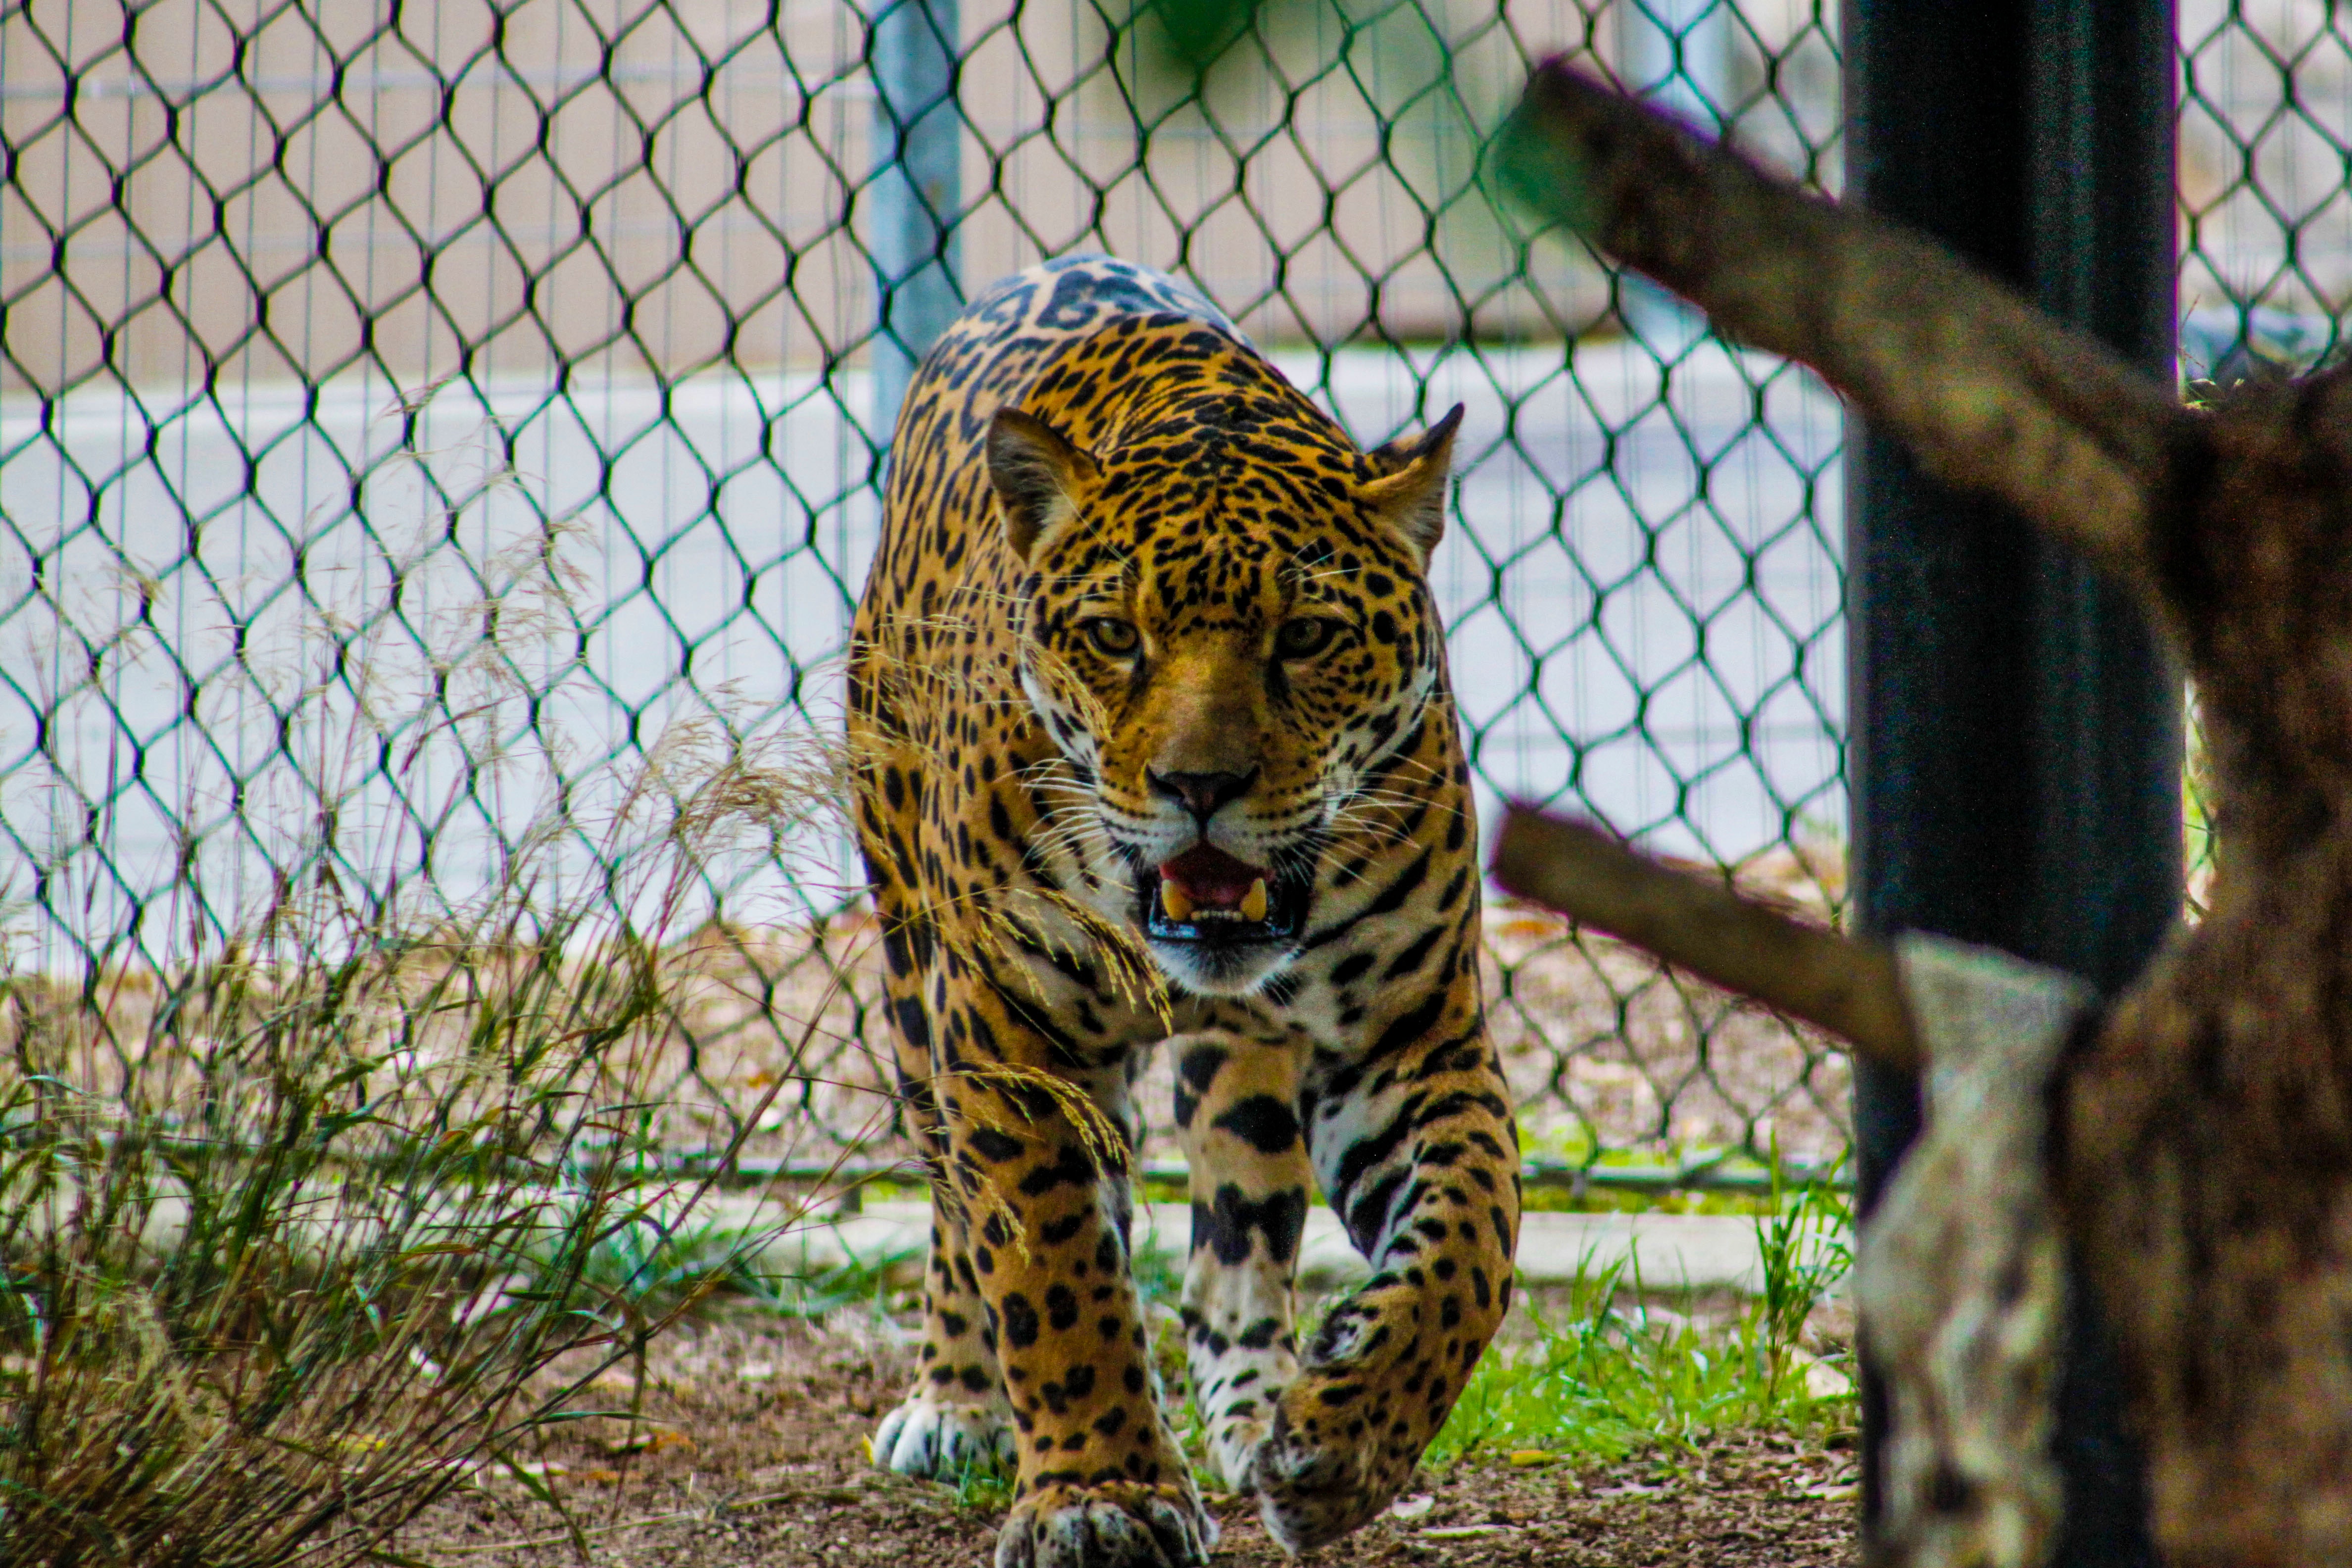 Growling Leopard Inside Enclosure, Animal, Hunter, Wildlife photography, Wildlife, HQ Photo